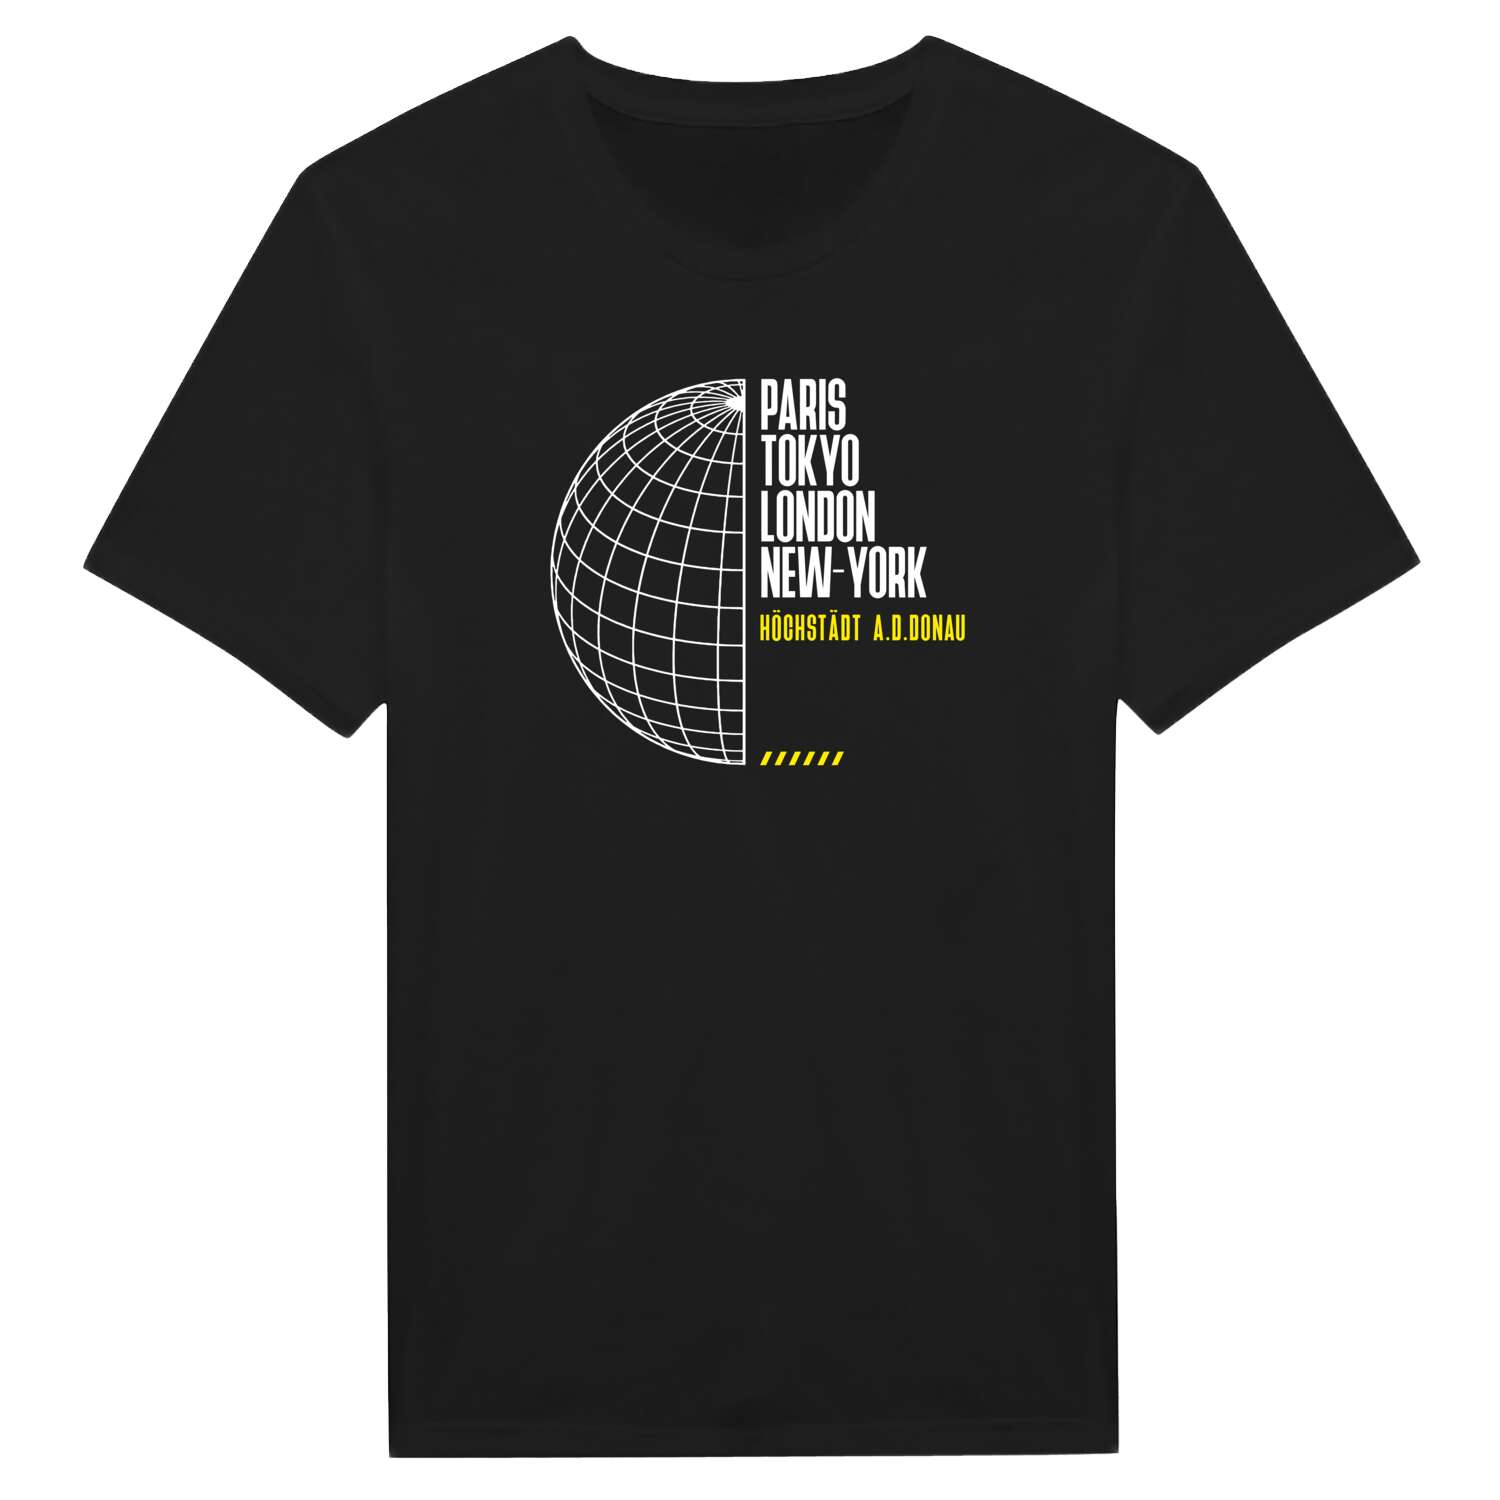 Höchstädt a.d.Donau T-Shirt »Paris Tokyo London«